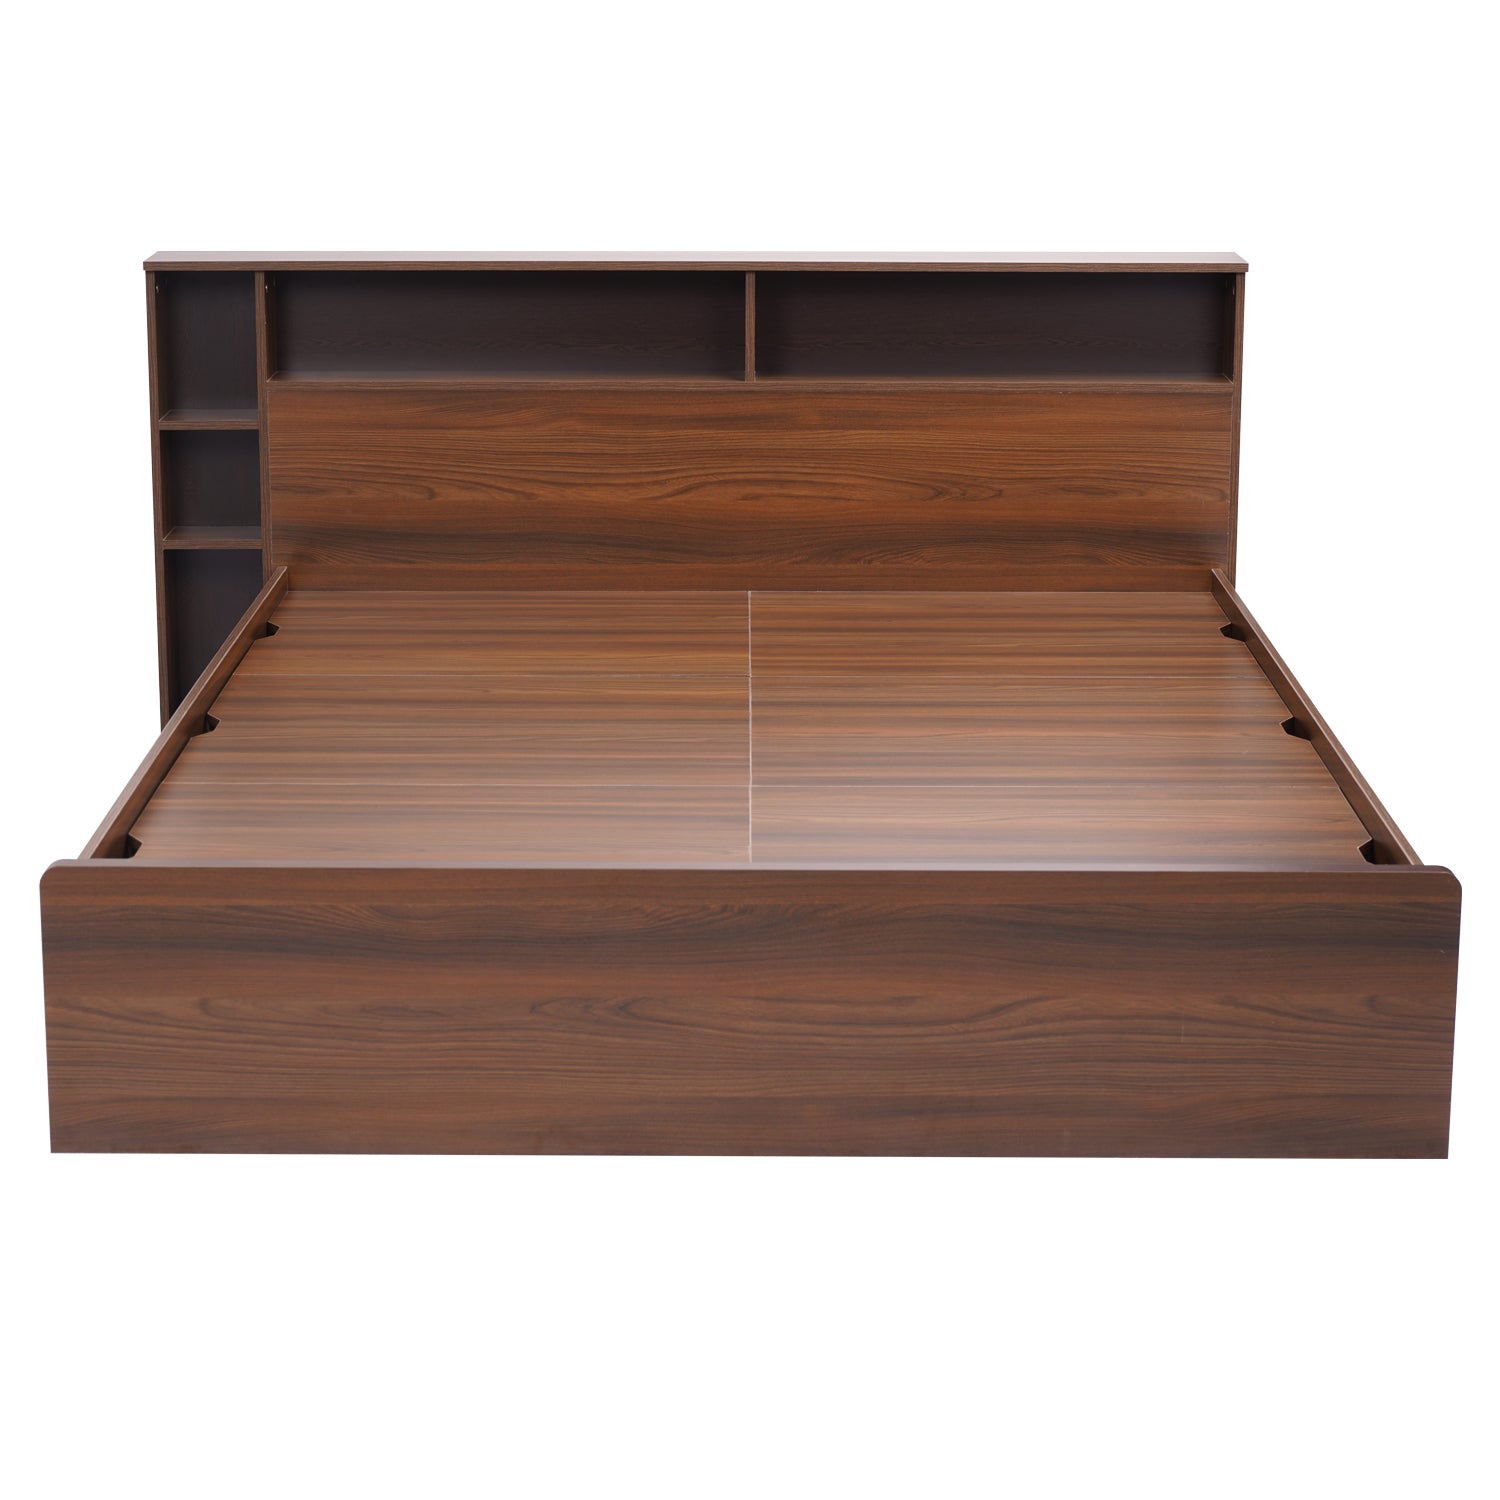 Torrie King Bed with Headboard & Box Storage (Classic Walnut)